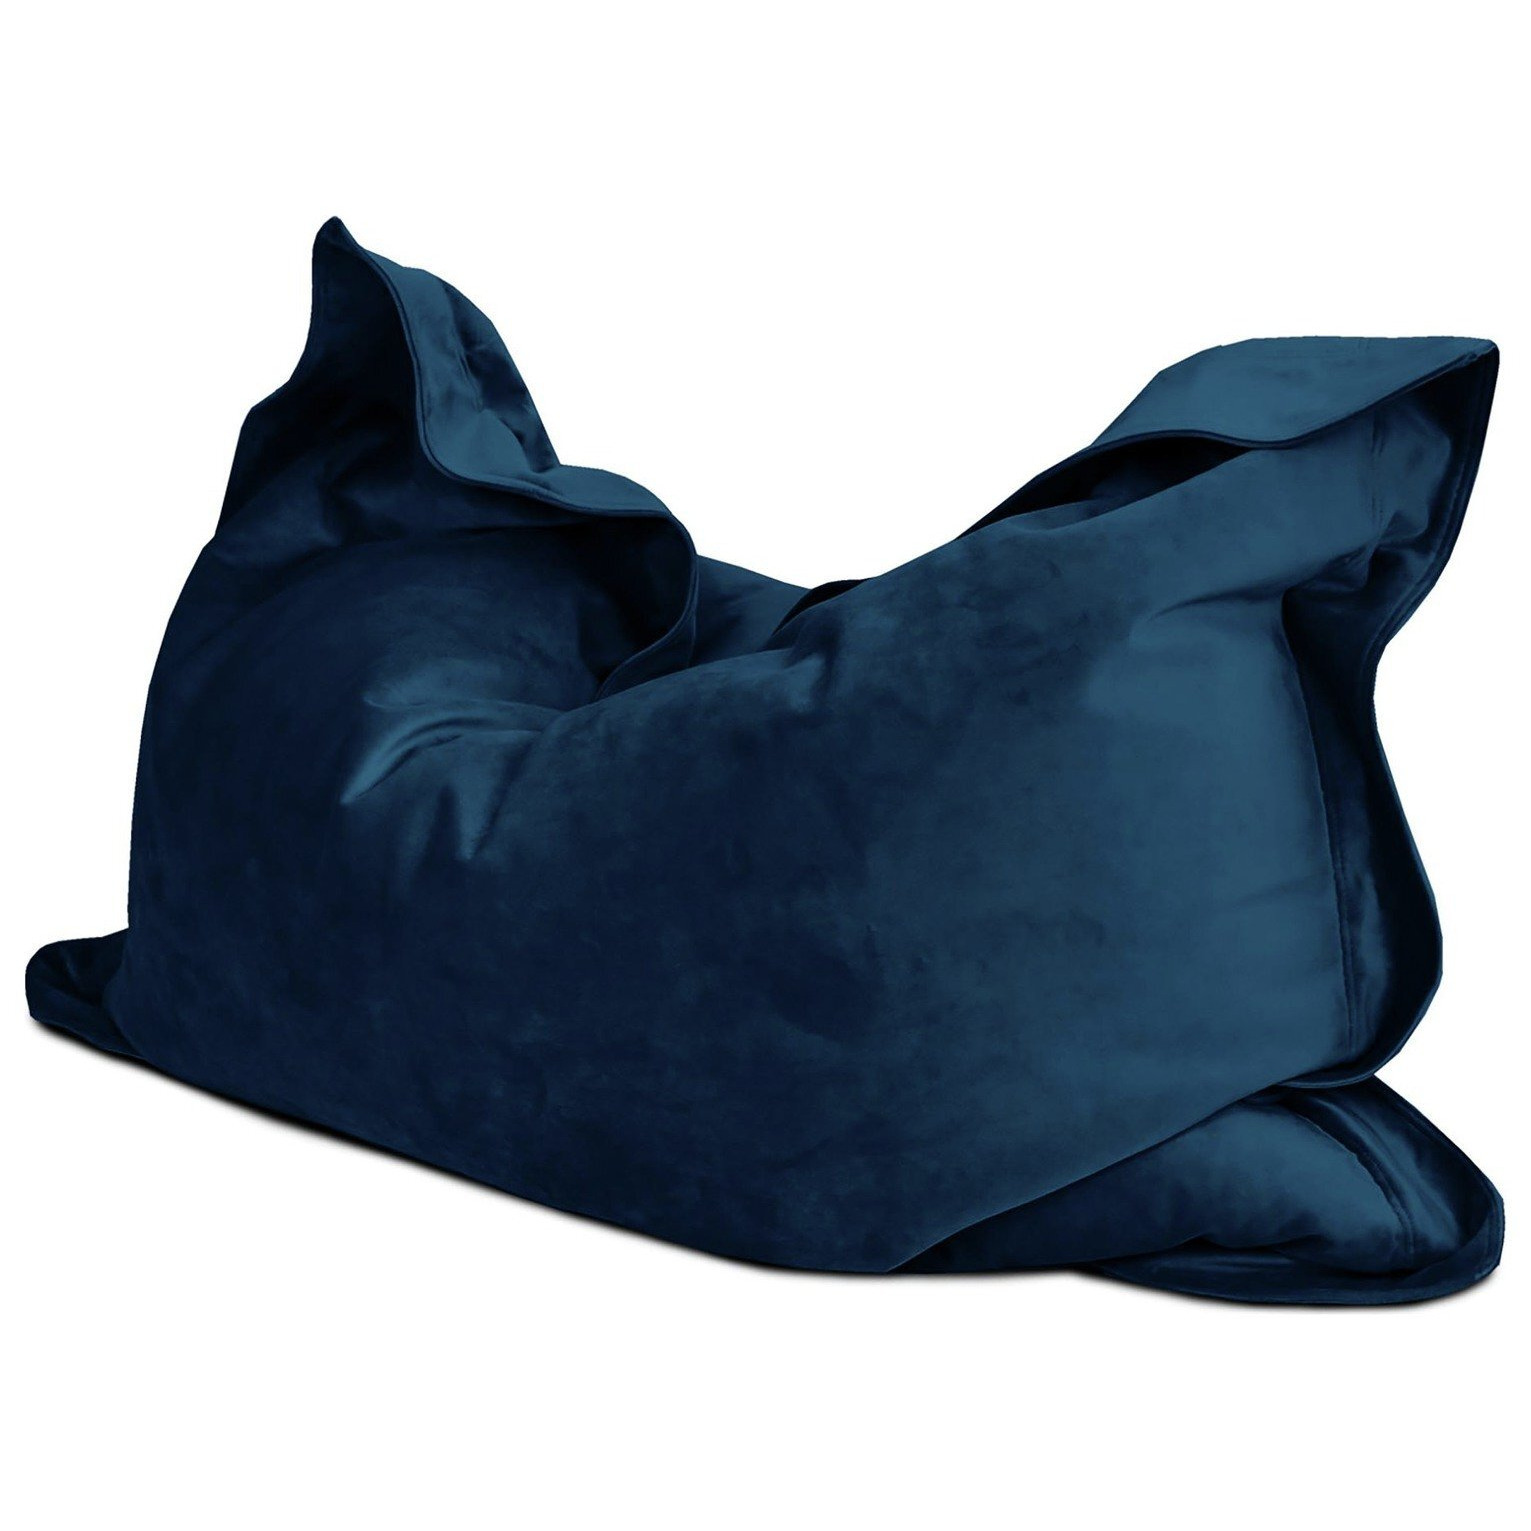 rucomfy Velvet XL Squarbie Bean Bag - Peacock Blue - image 1